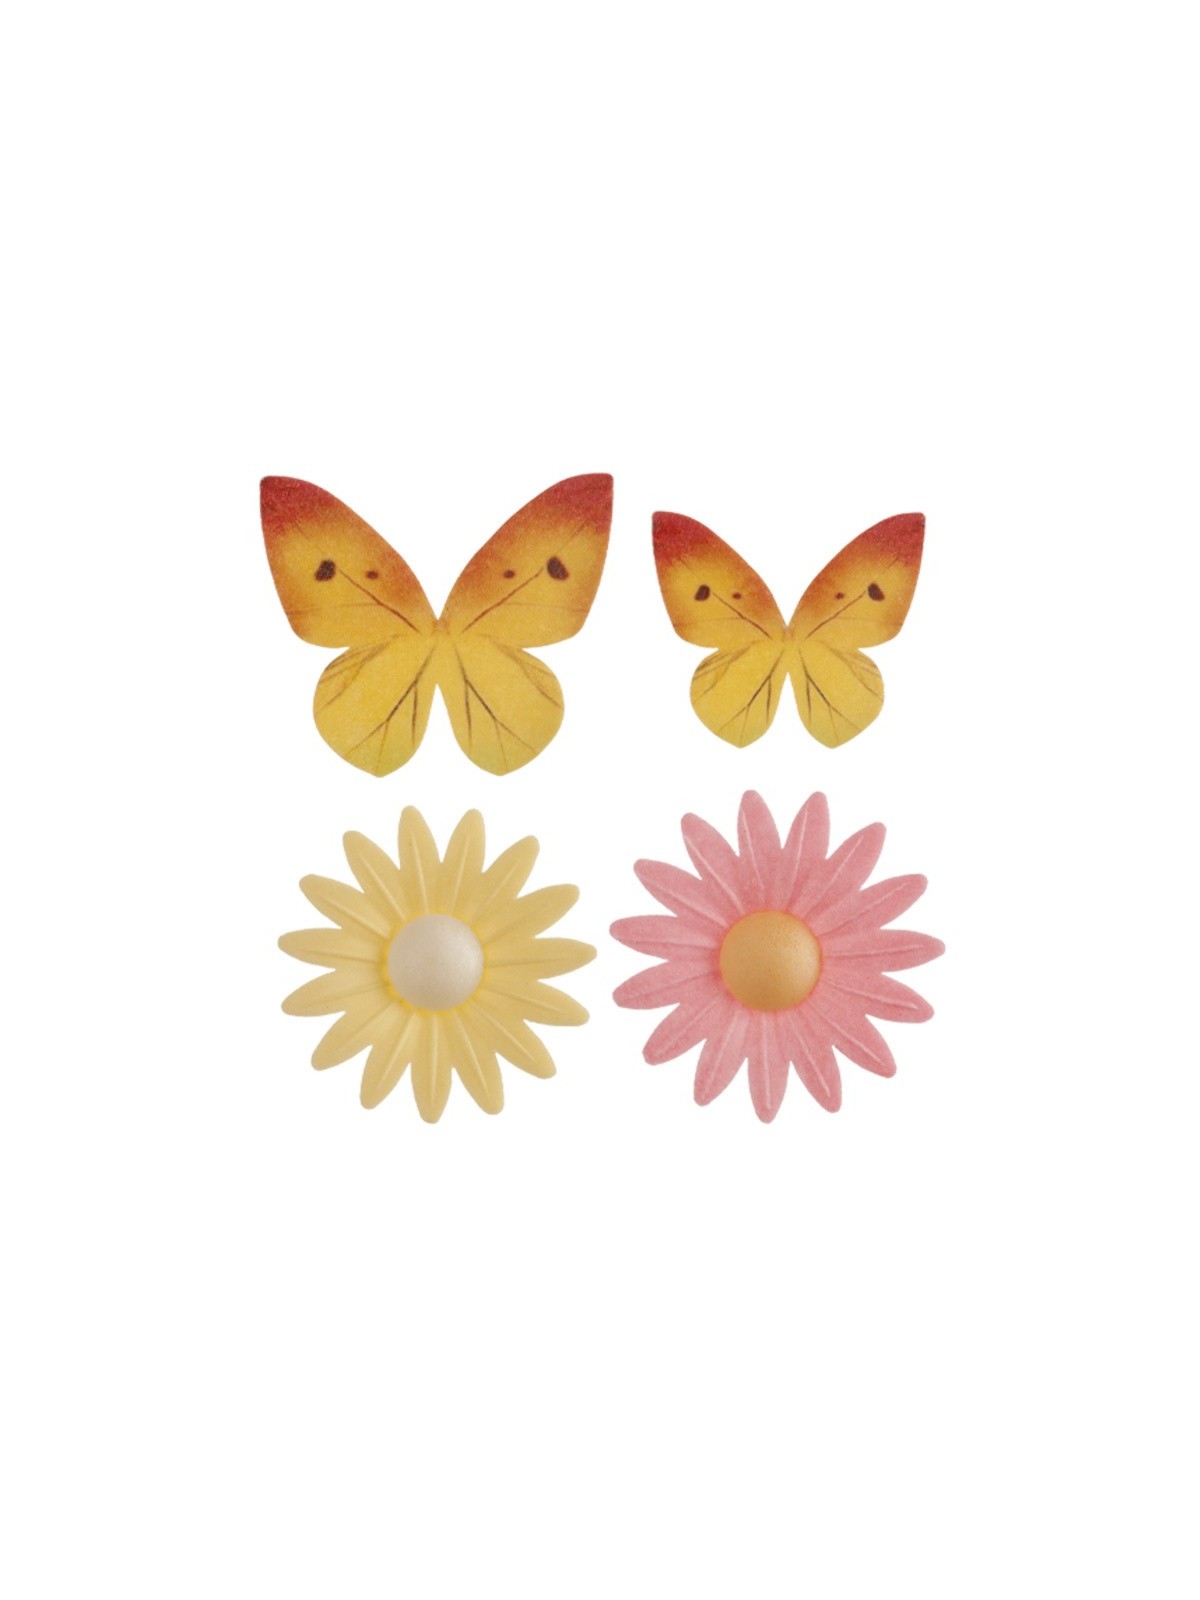 Dekora edible paper - 4 pcs of butterflies + 4 pcs of daisies